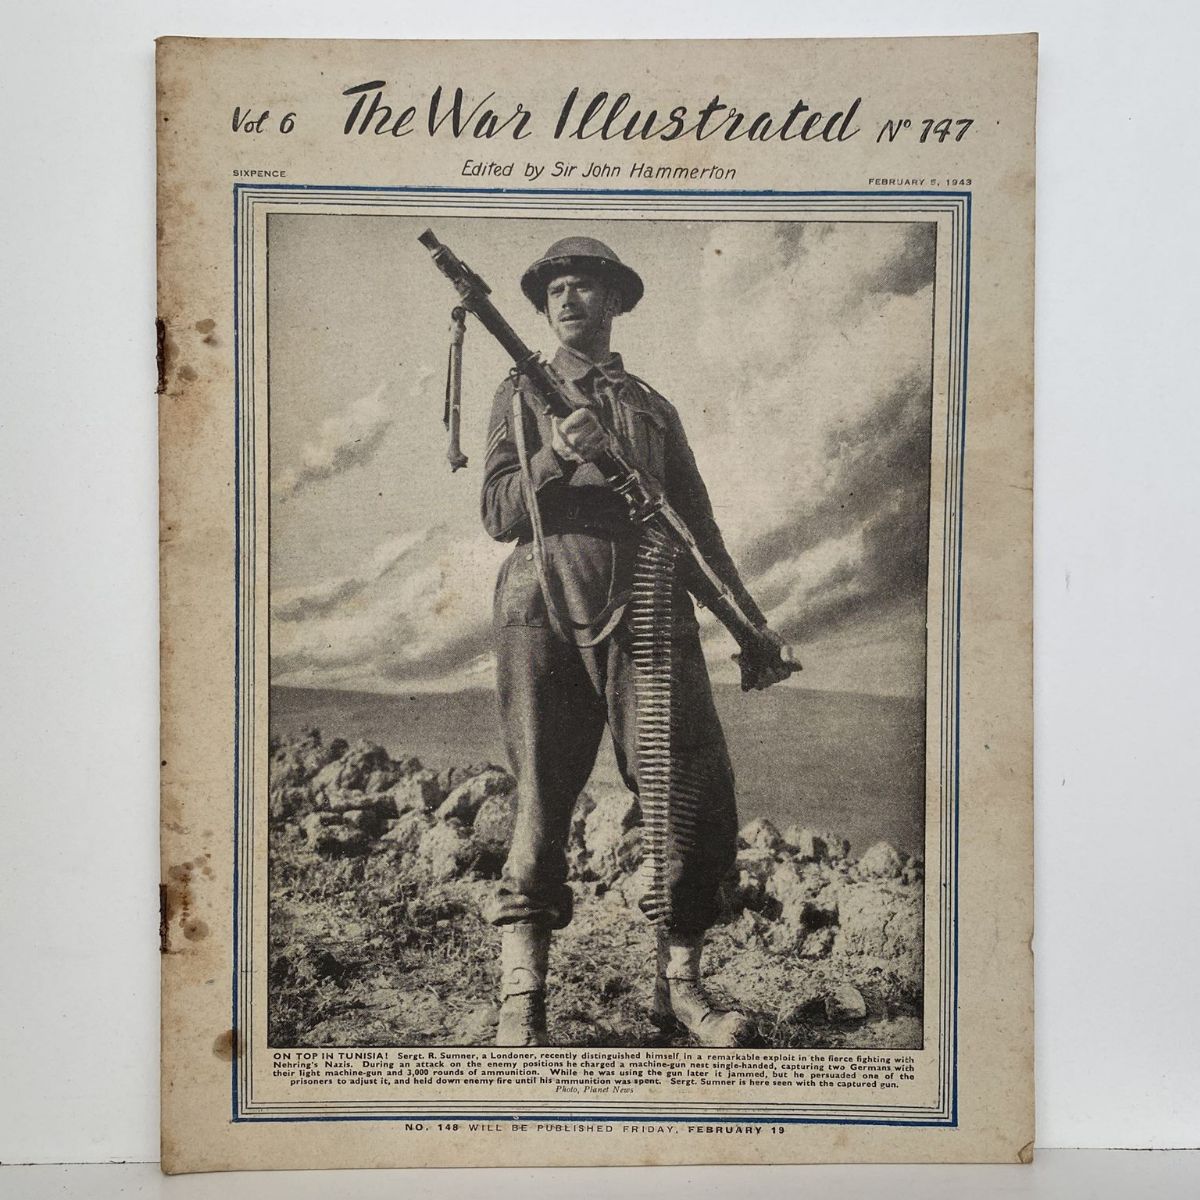 THE WAR ILLUSTRATED - Vol 6, No 147, 5th Feb 1943